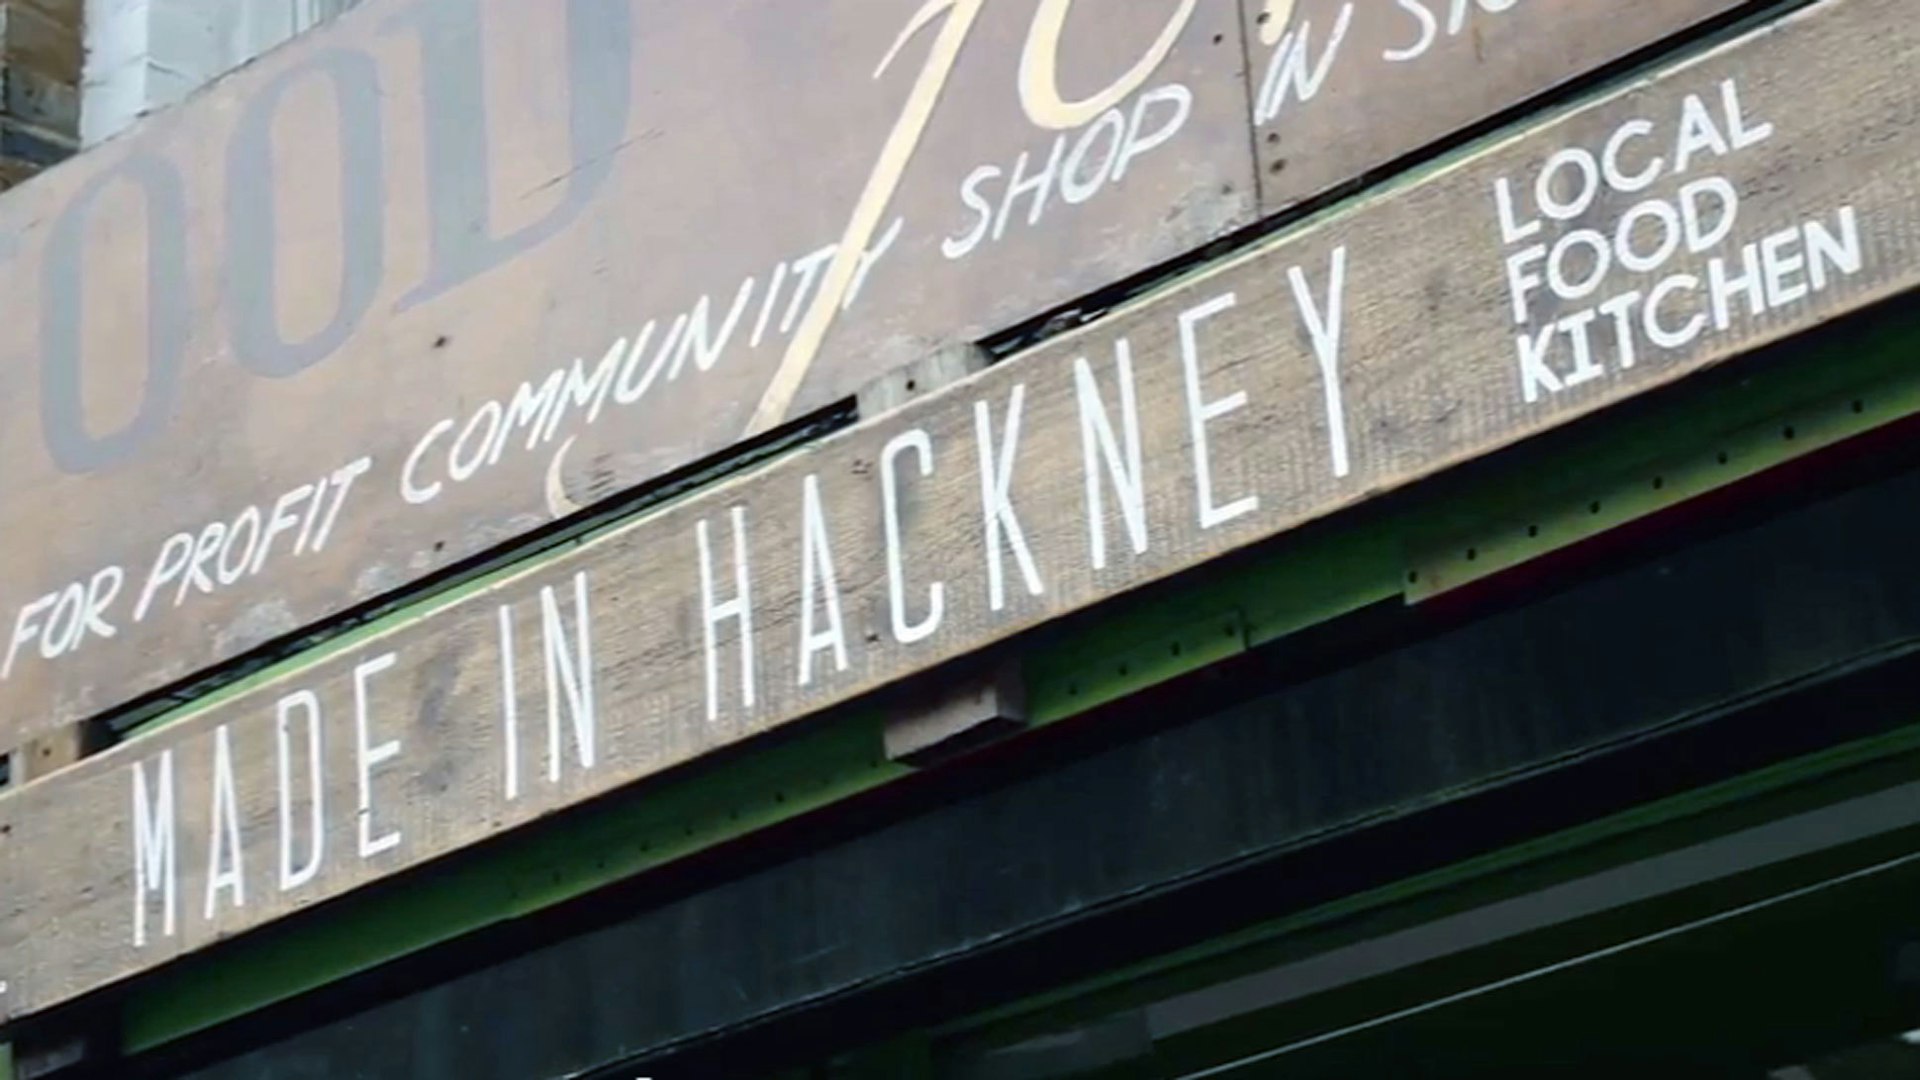 Made in Hackney